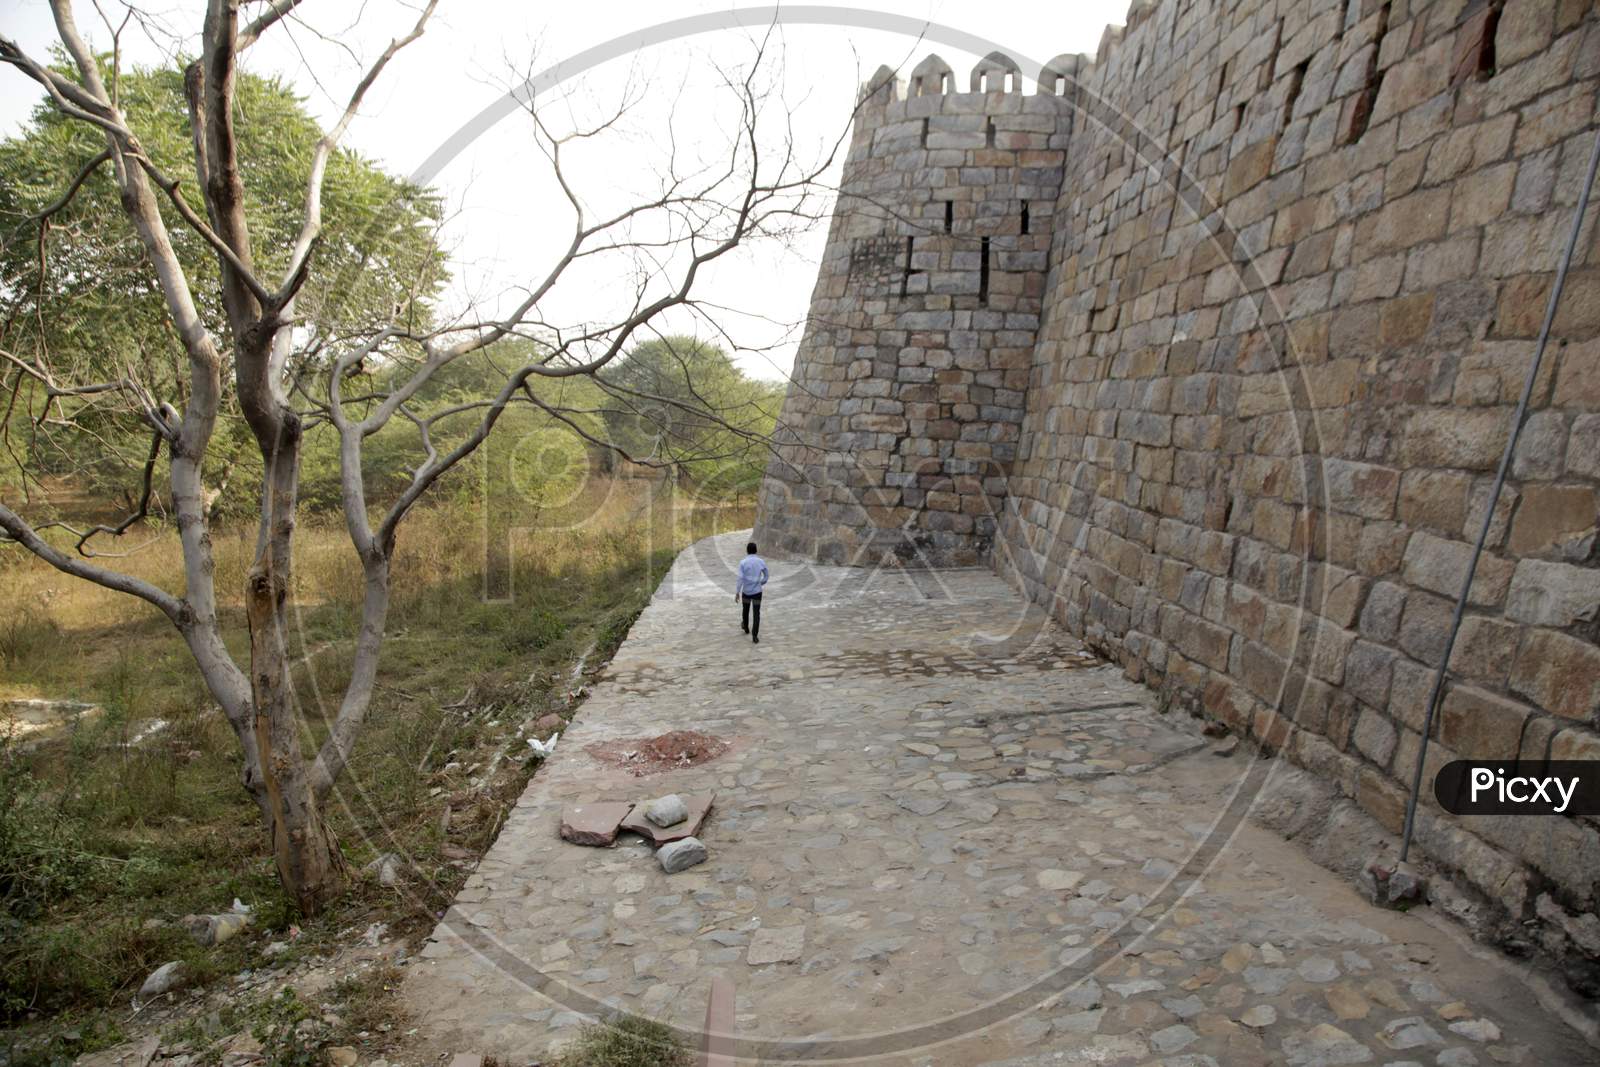 Stone Wall in Tughlakabad Fort in New Delhi